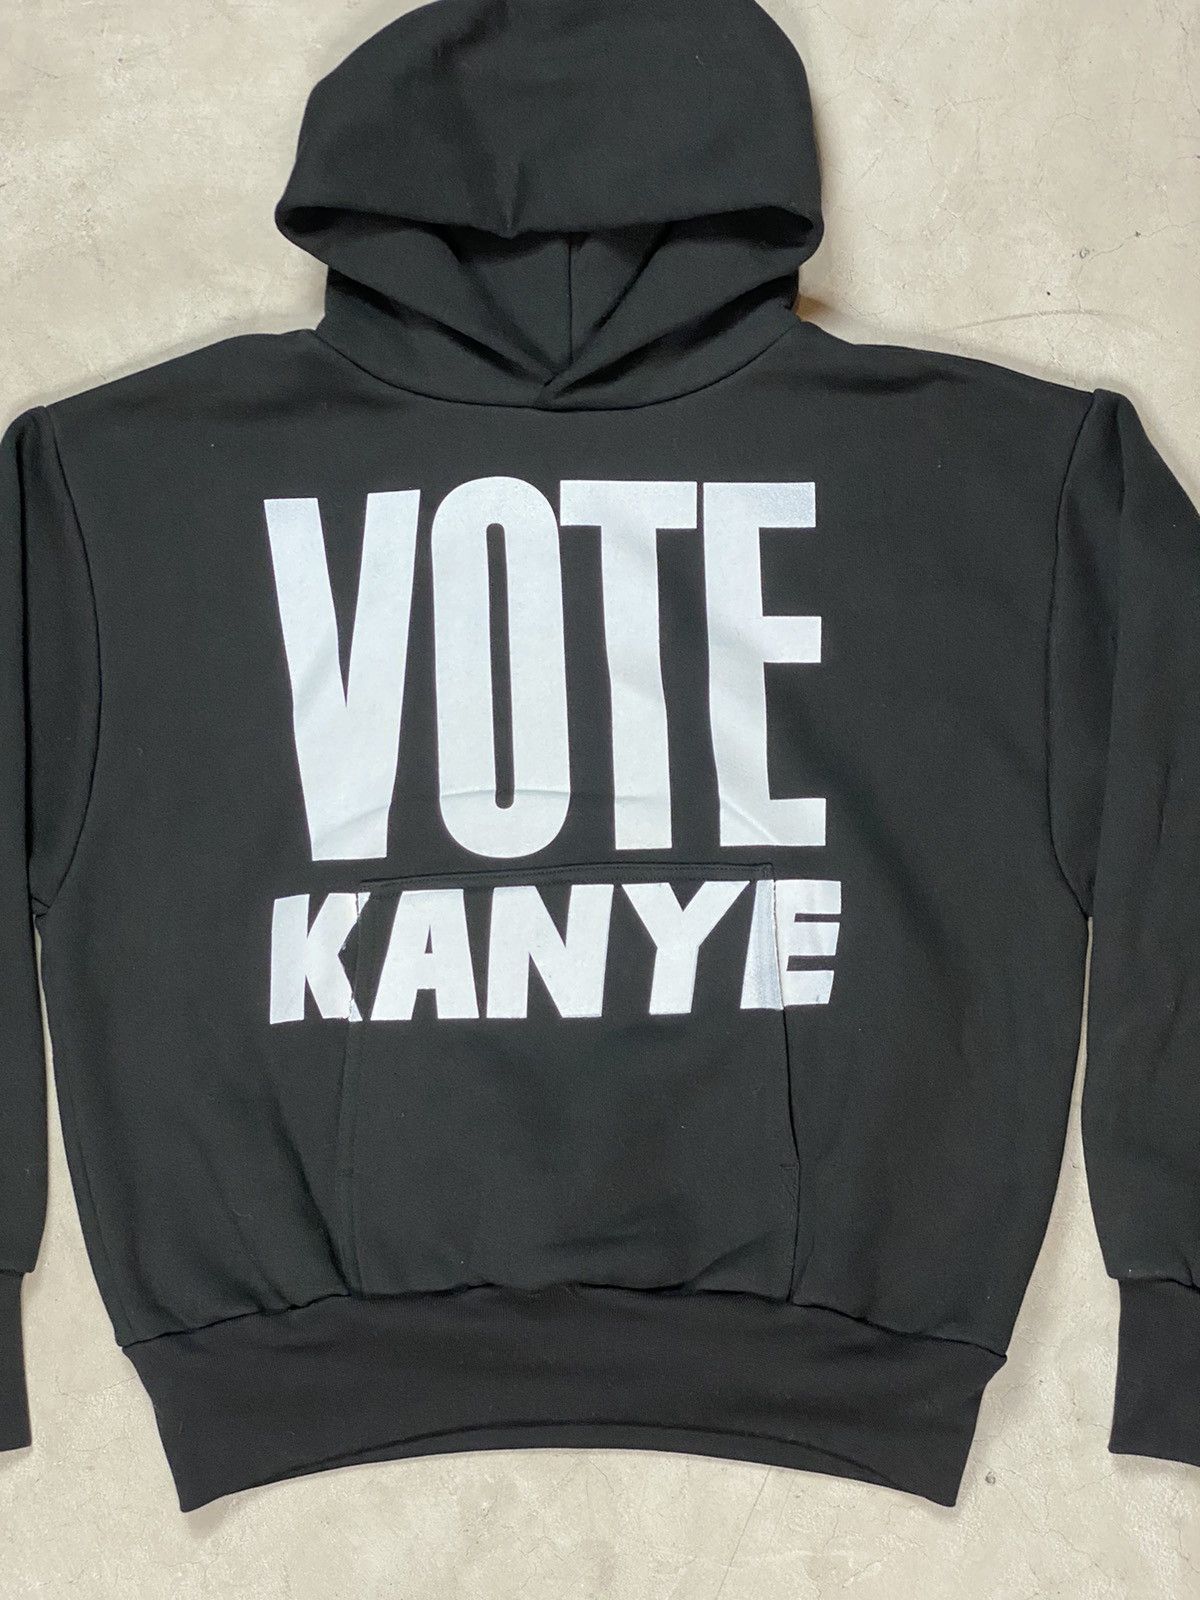 Kanye West Vote Kanye Hoodie Size US L / EU 52-54 / 3 - 3 Thumbnail